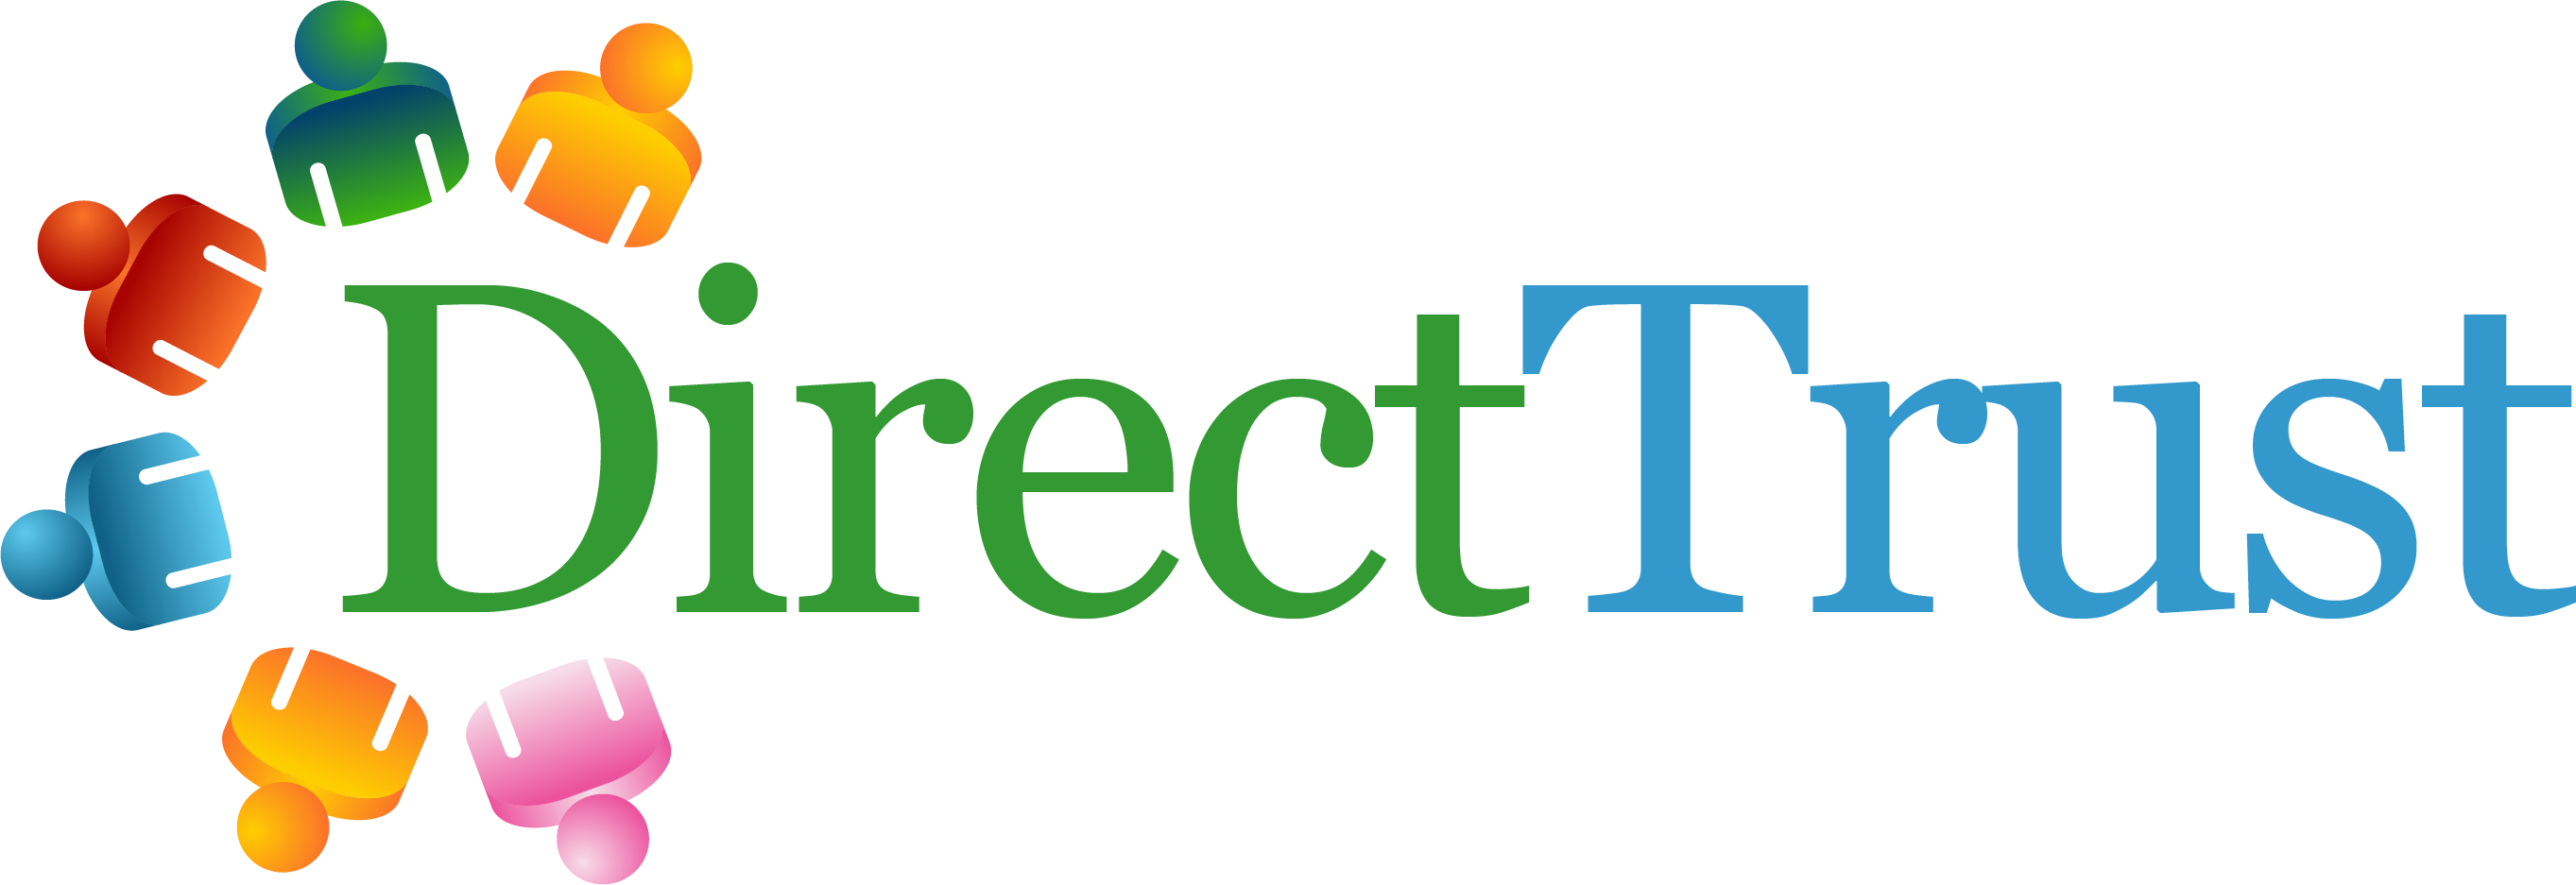 directtrust_logo_July_2019.png